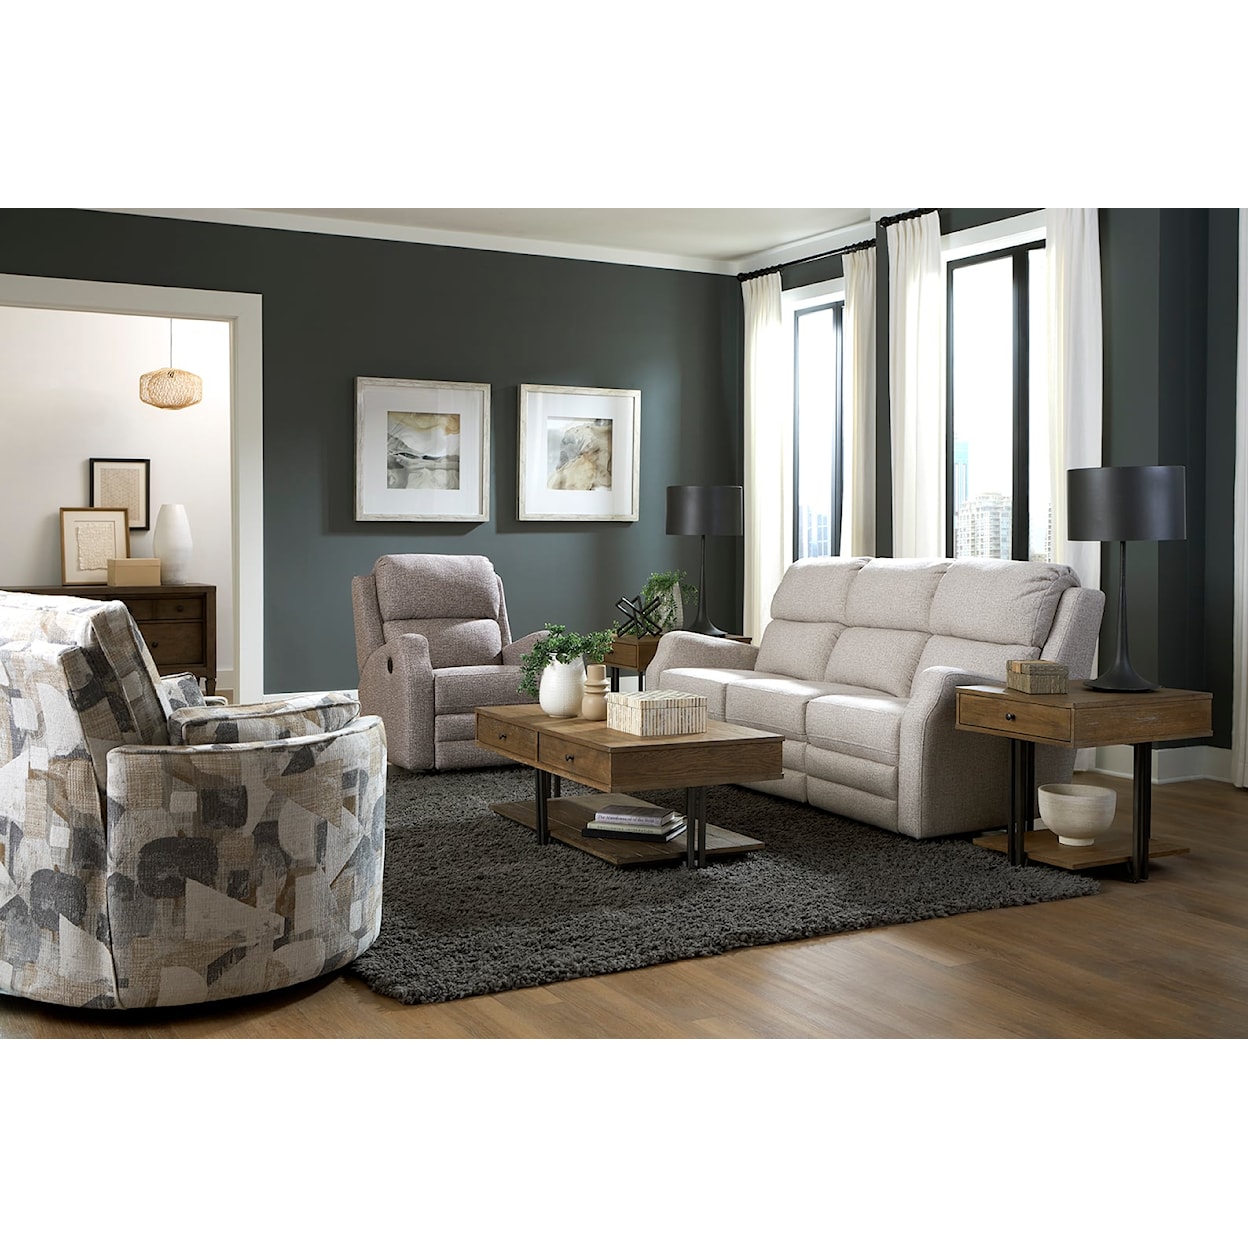 Dimensions EZ1A00/H Series Double Reclining Sofa